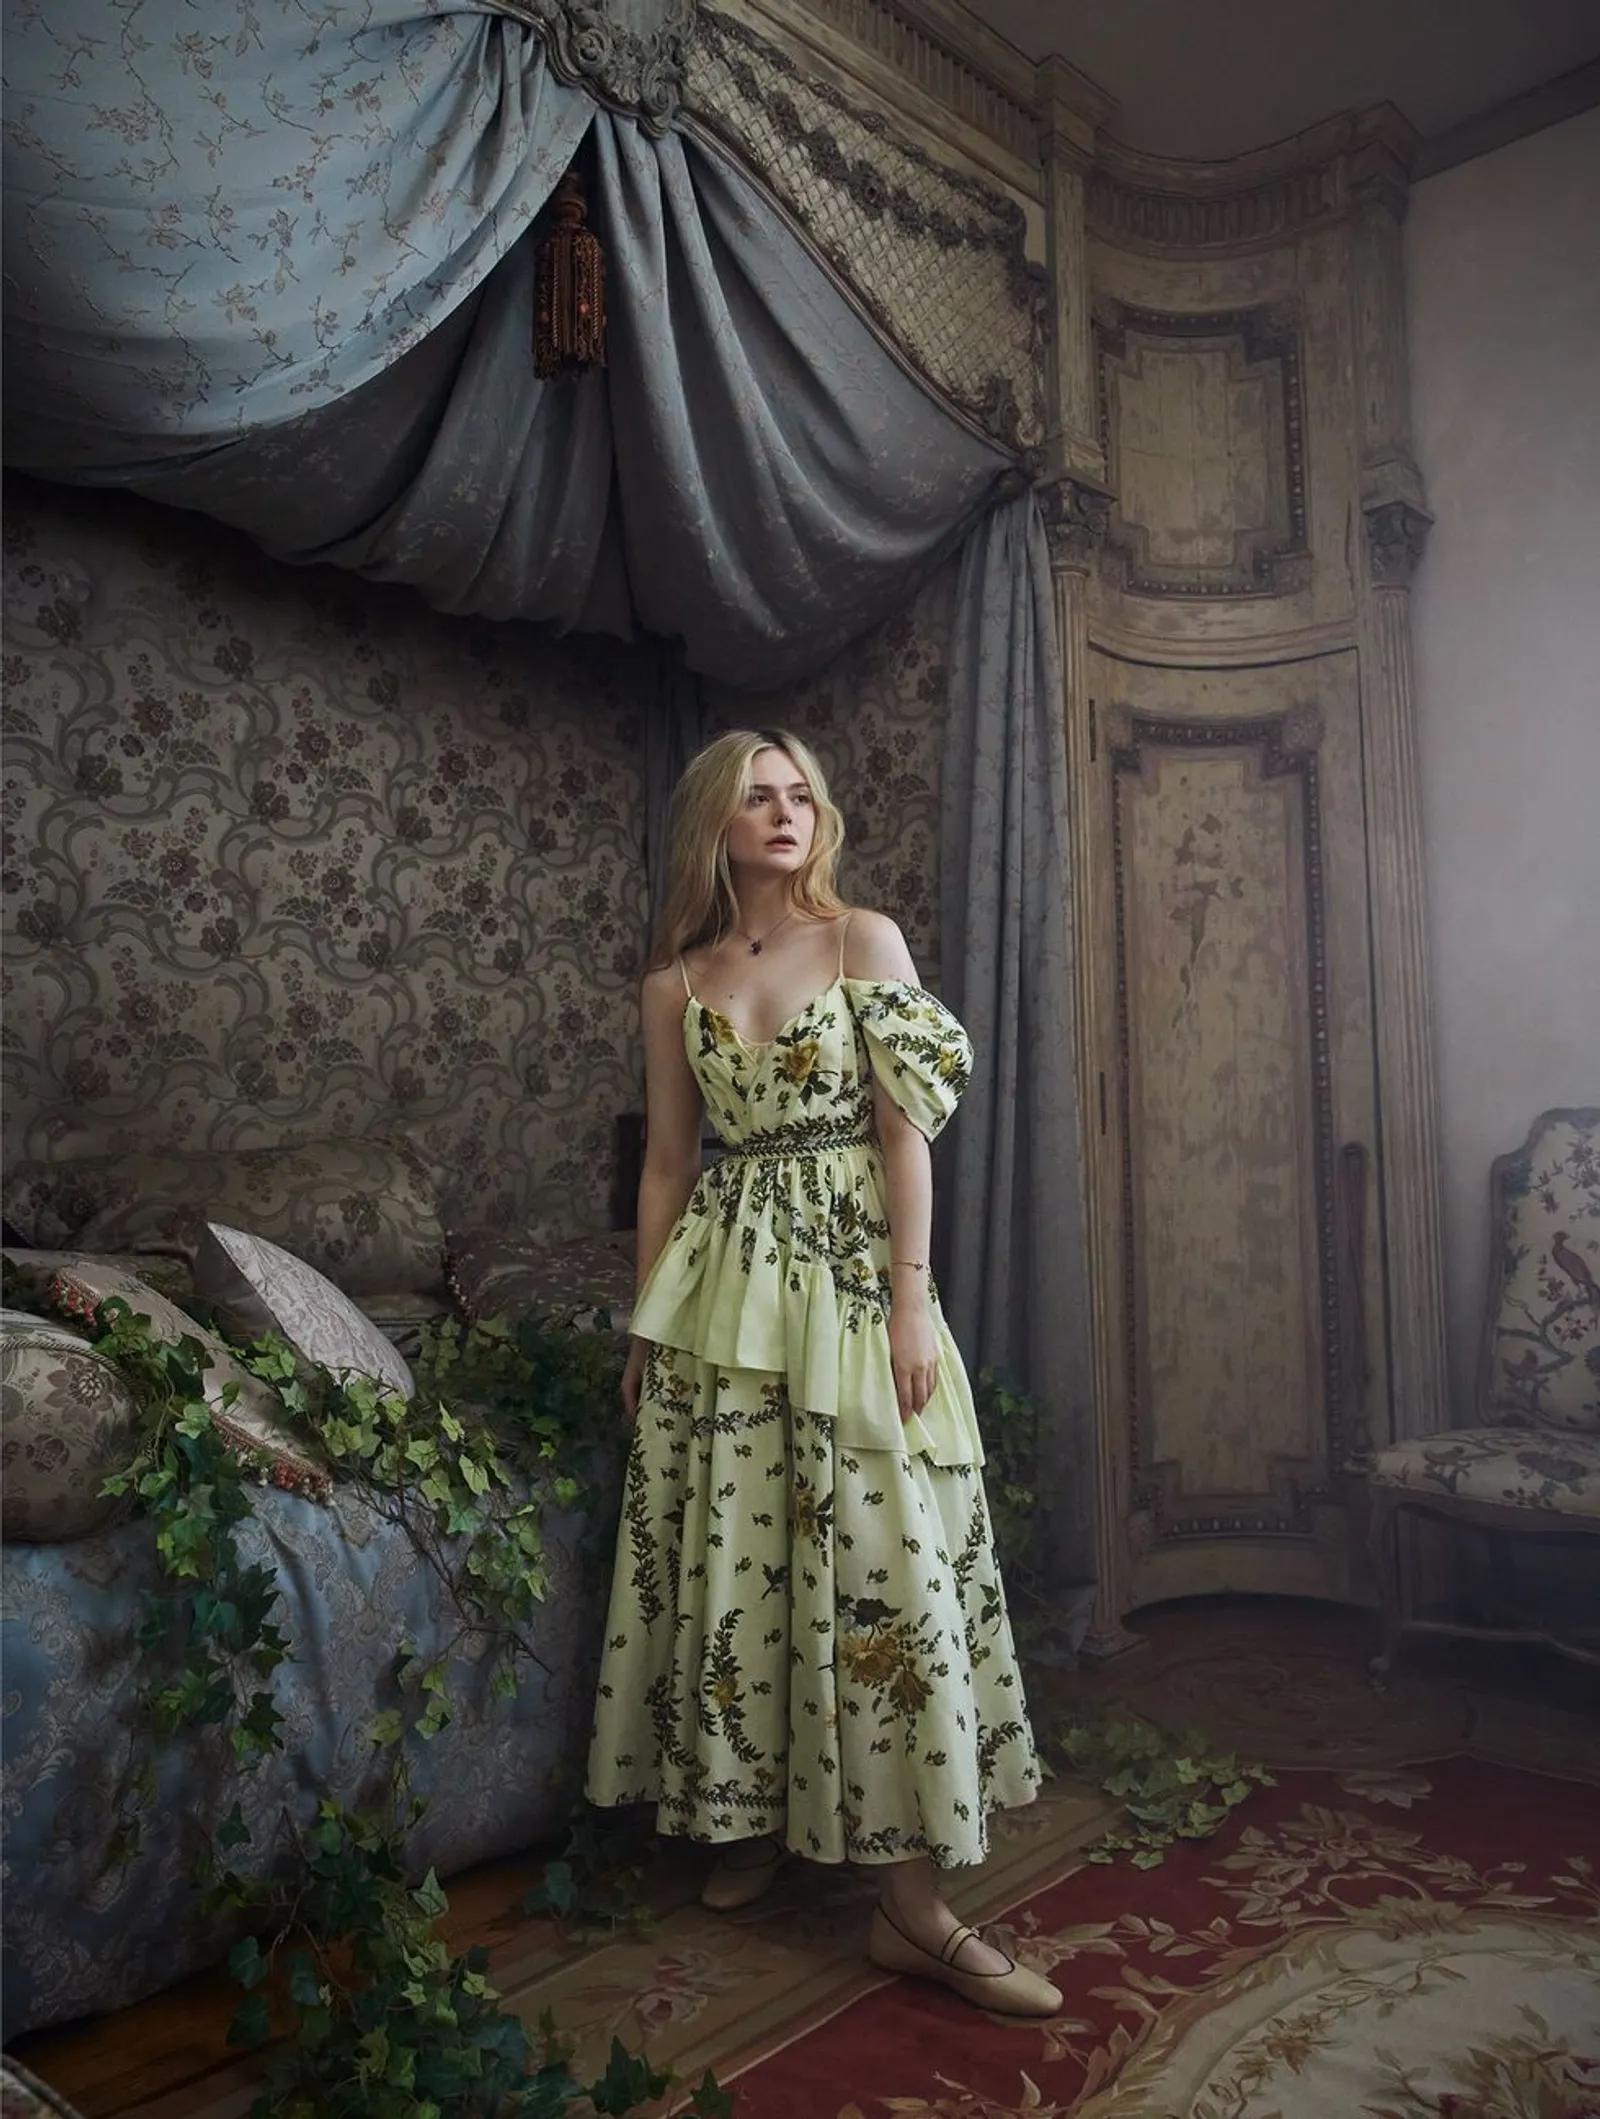 Penampilan Elle Fanning di Photoshoot Bernuansa Fairytale